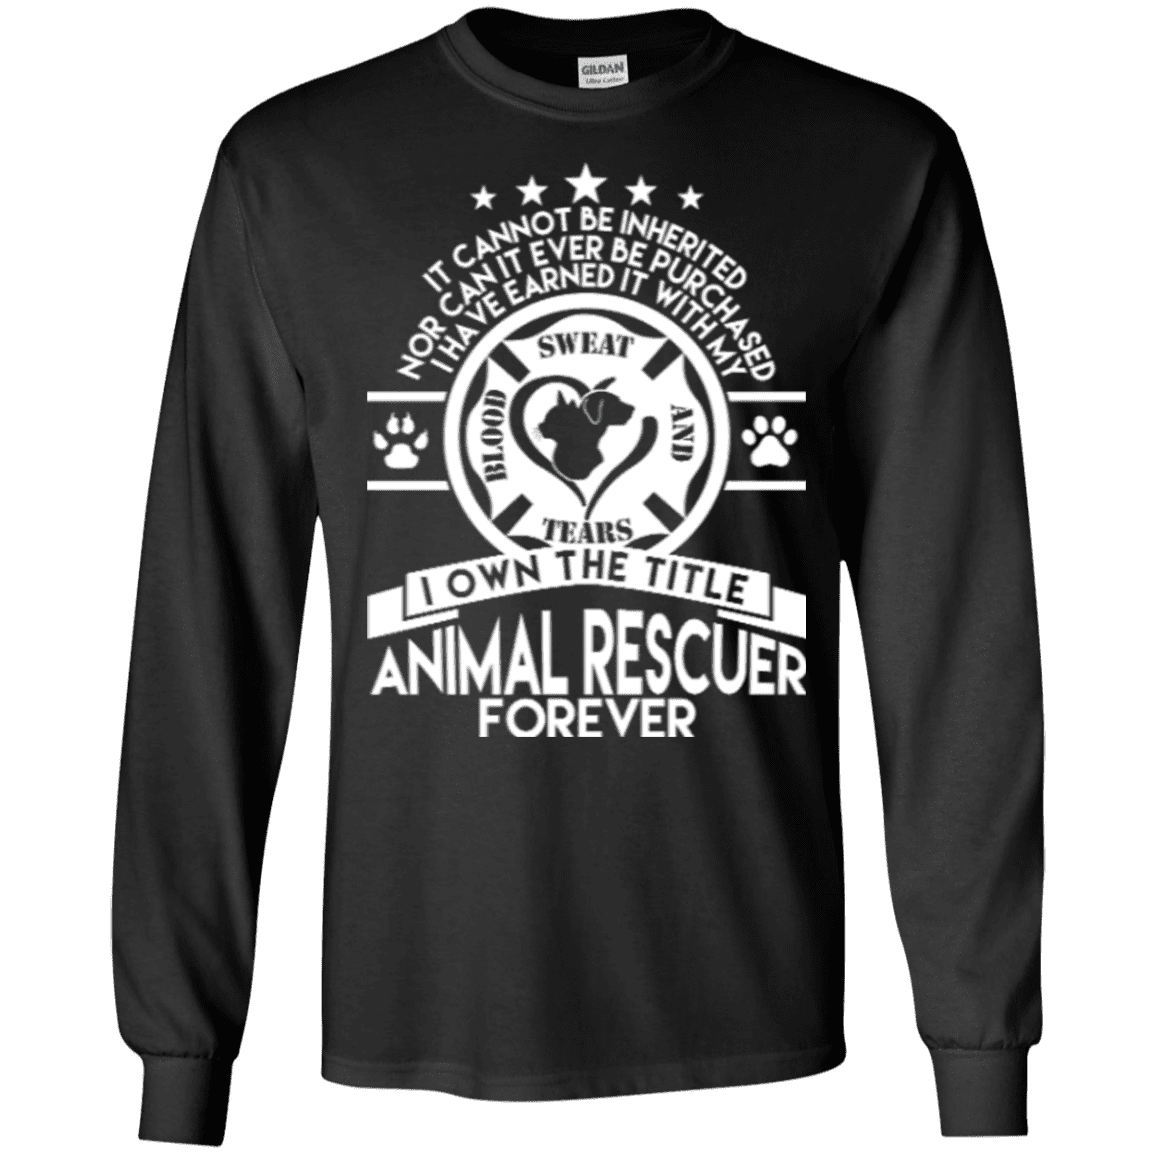 Animal Rescuer Forever - Long Sleeve T Shirt.